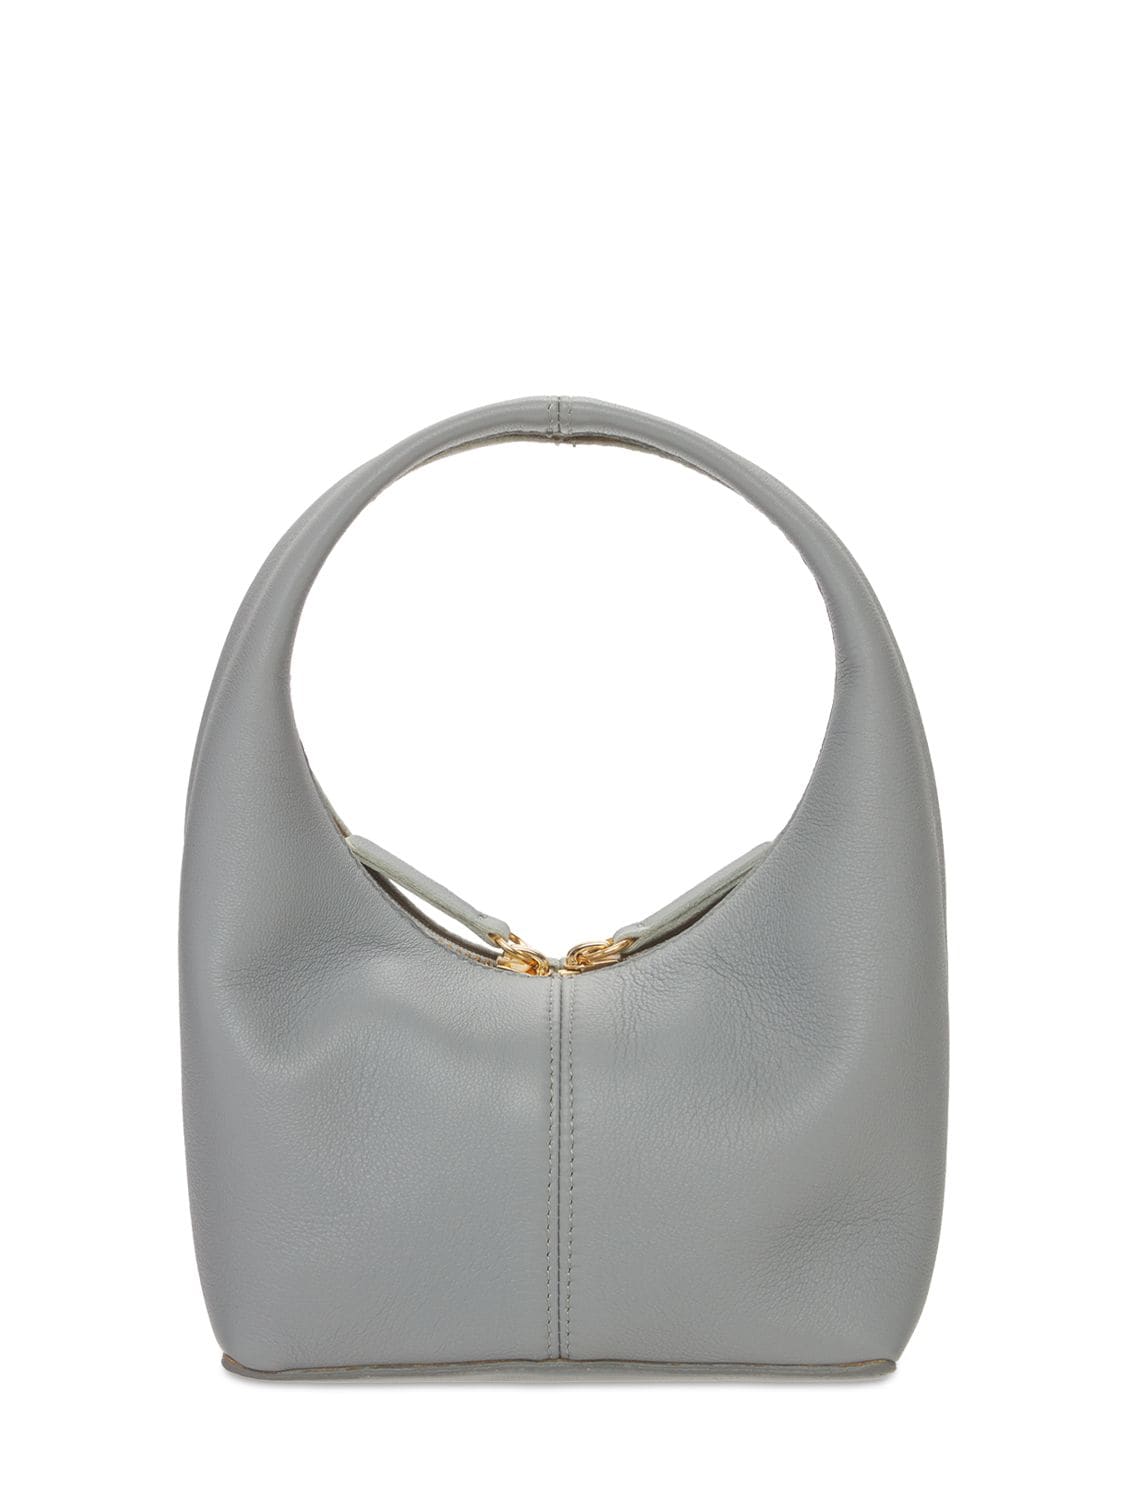 FRENZLAUER Bags for Women | ModeSens